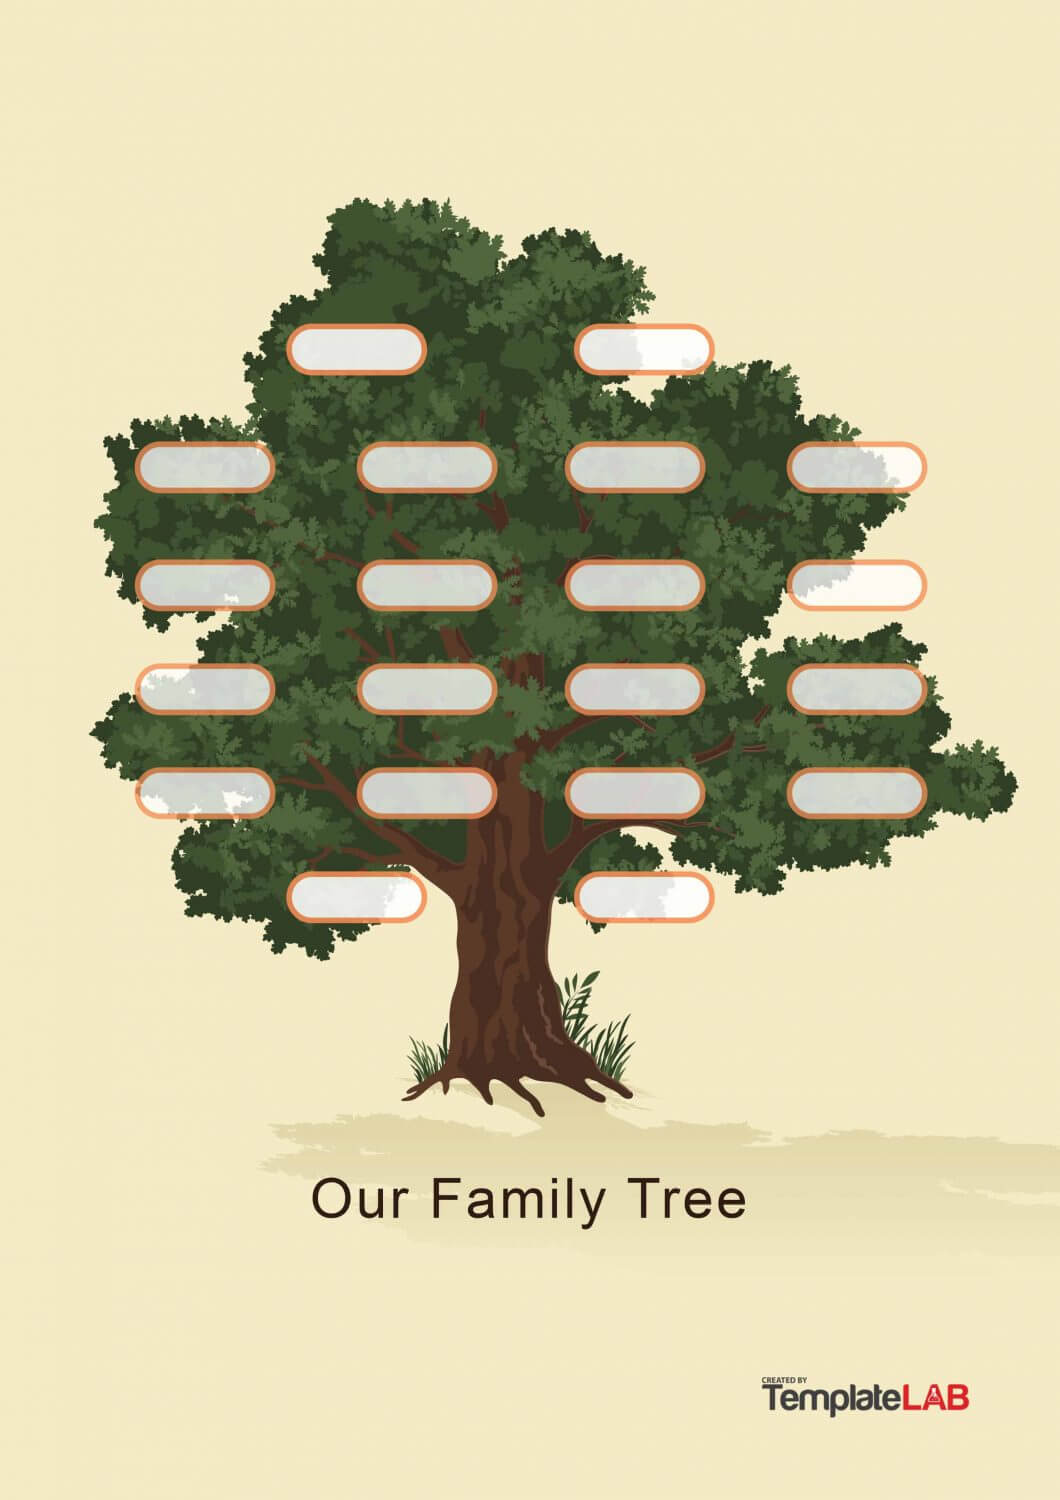 50+ Free Family Tree Templates (Word, Excel, Pdf) ᐅ Regarding 3 Generation Family Tree Template Word